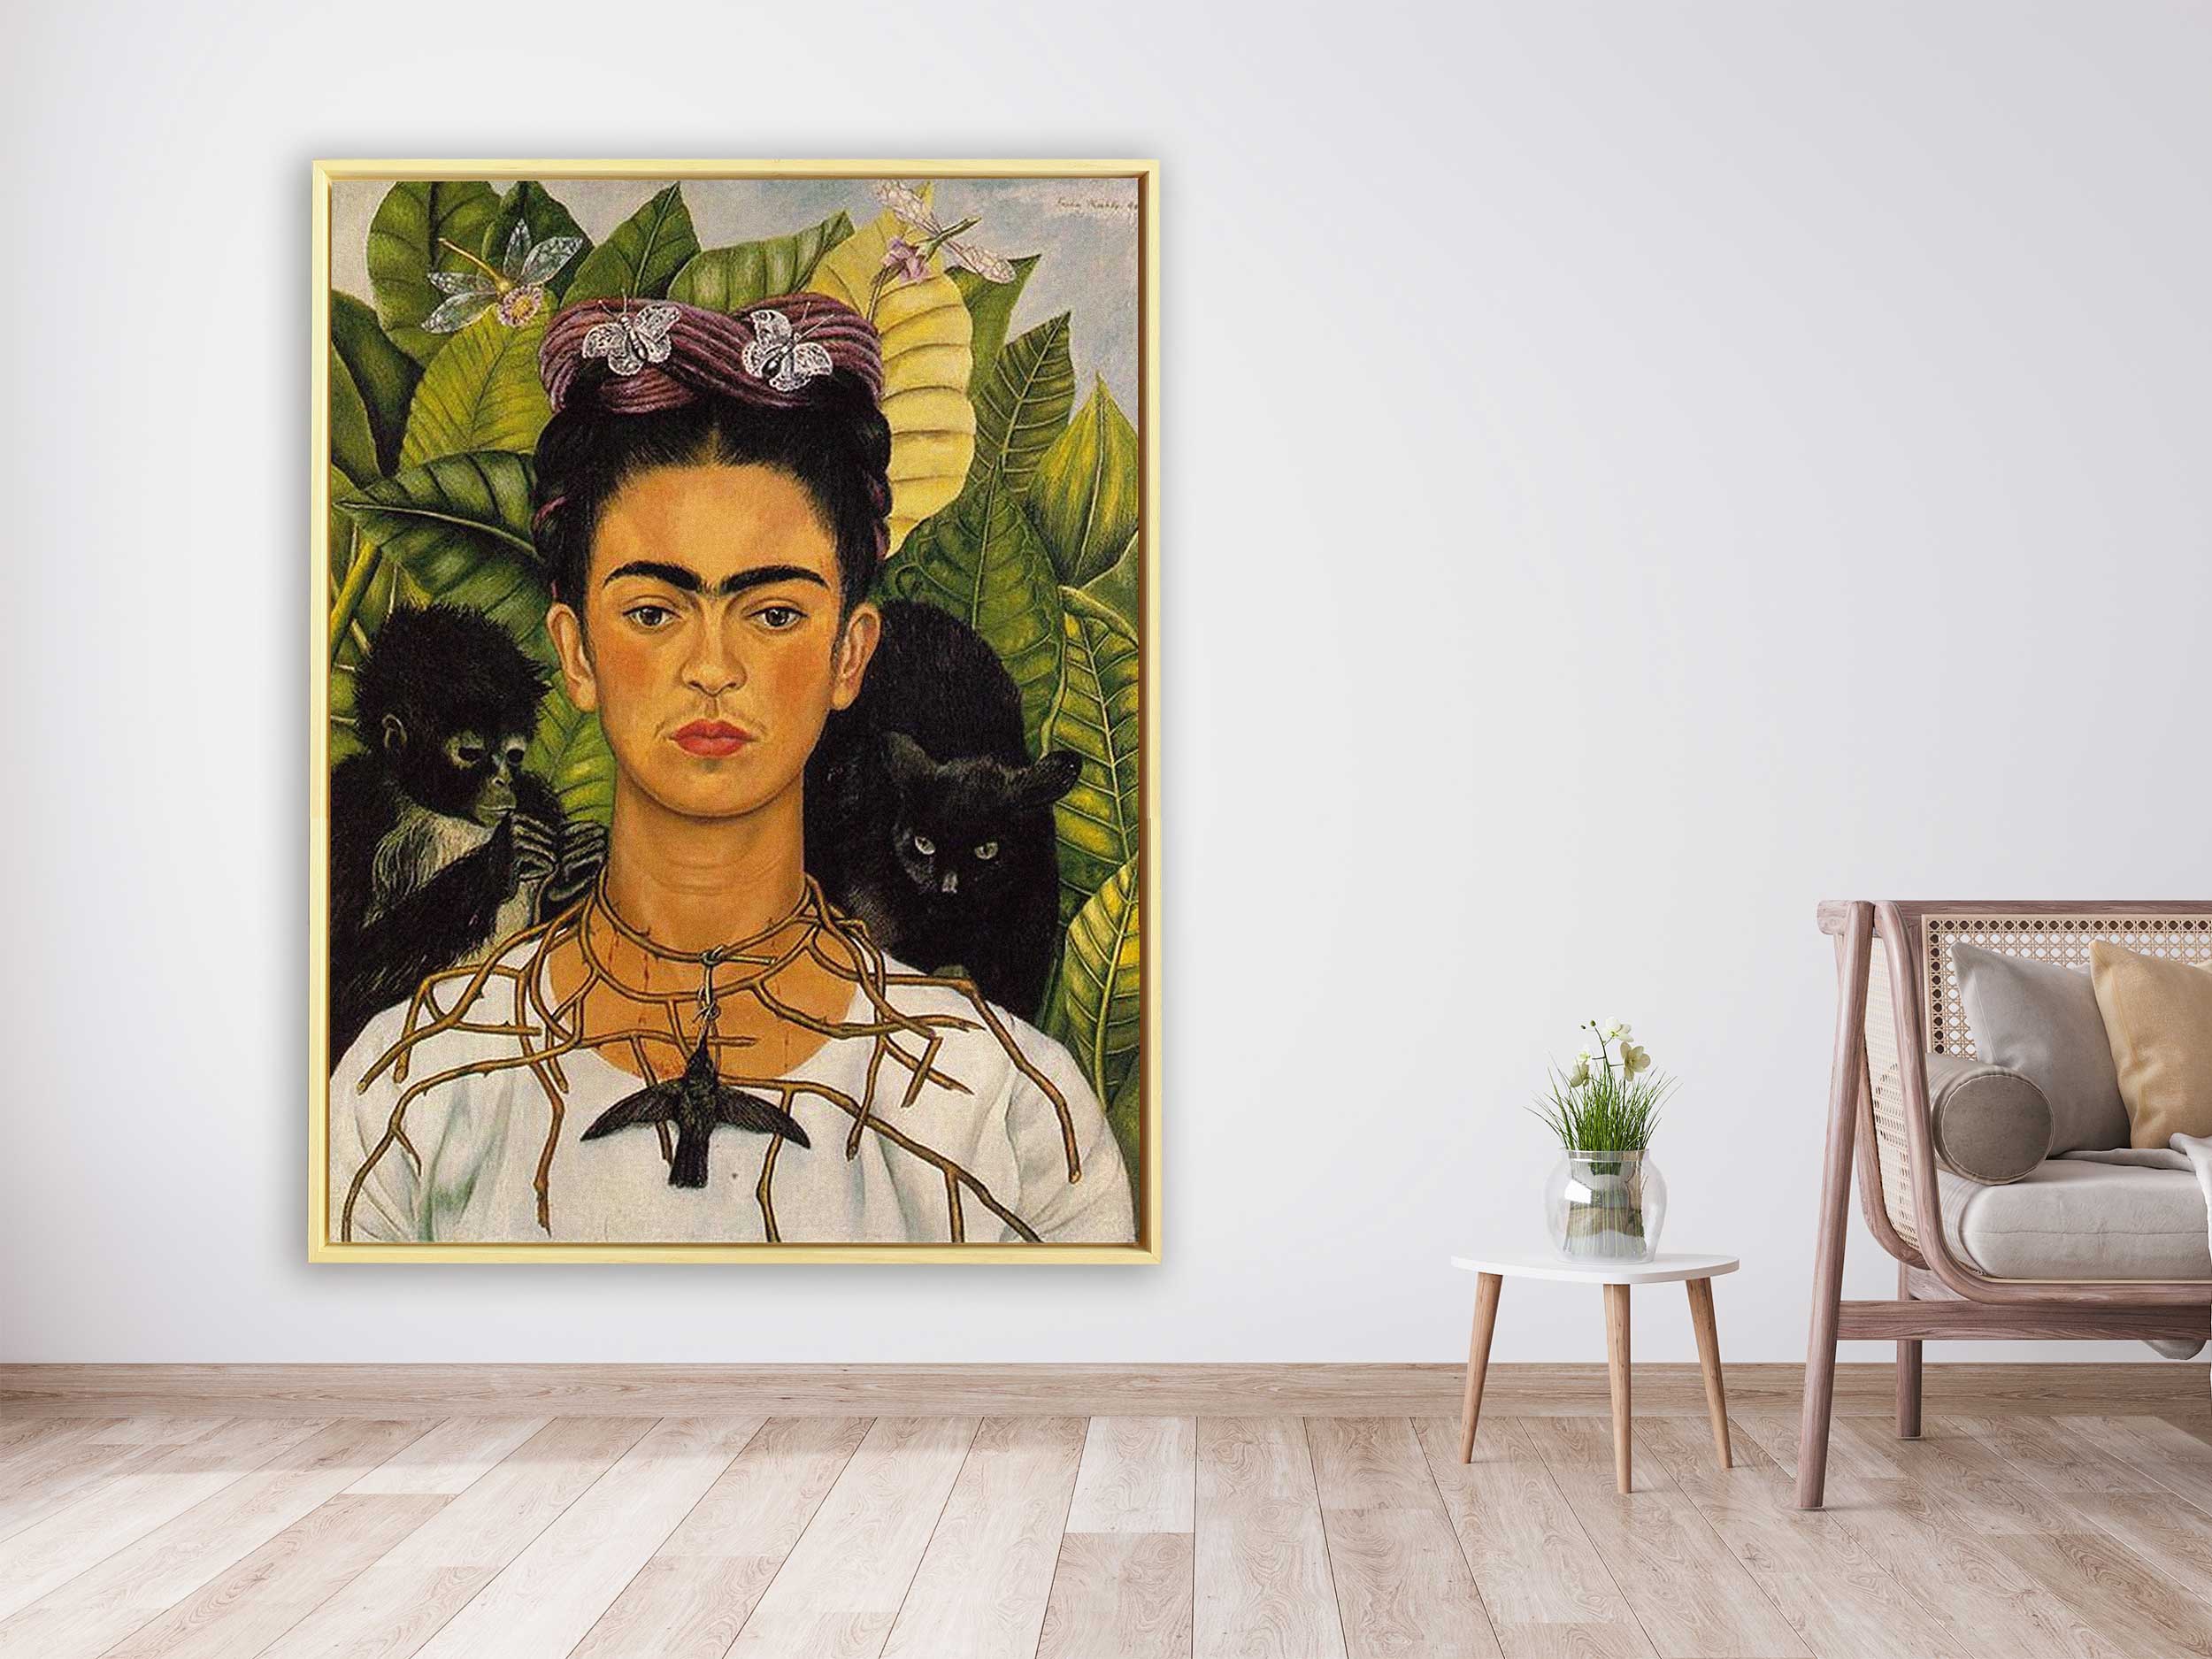 Frida Kahlo -  Self-portrait with Thorn Necklace and Hummingbird, 1940, Rahmen Schattenfuge Natur 